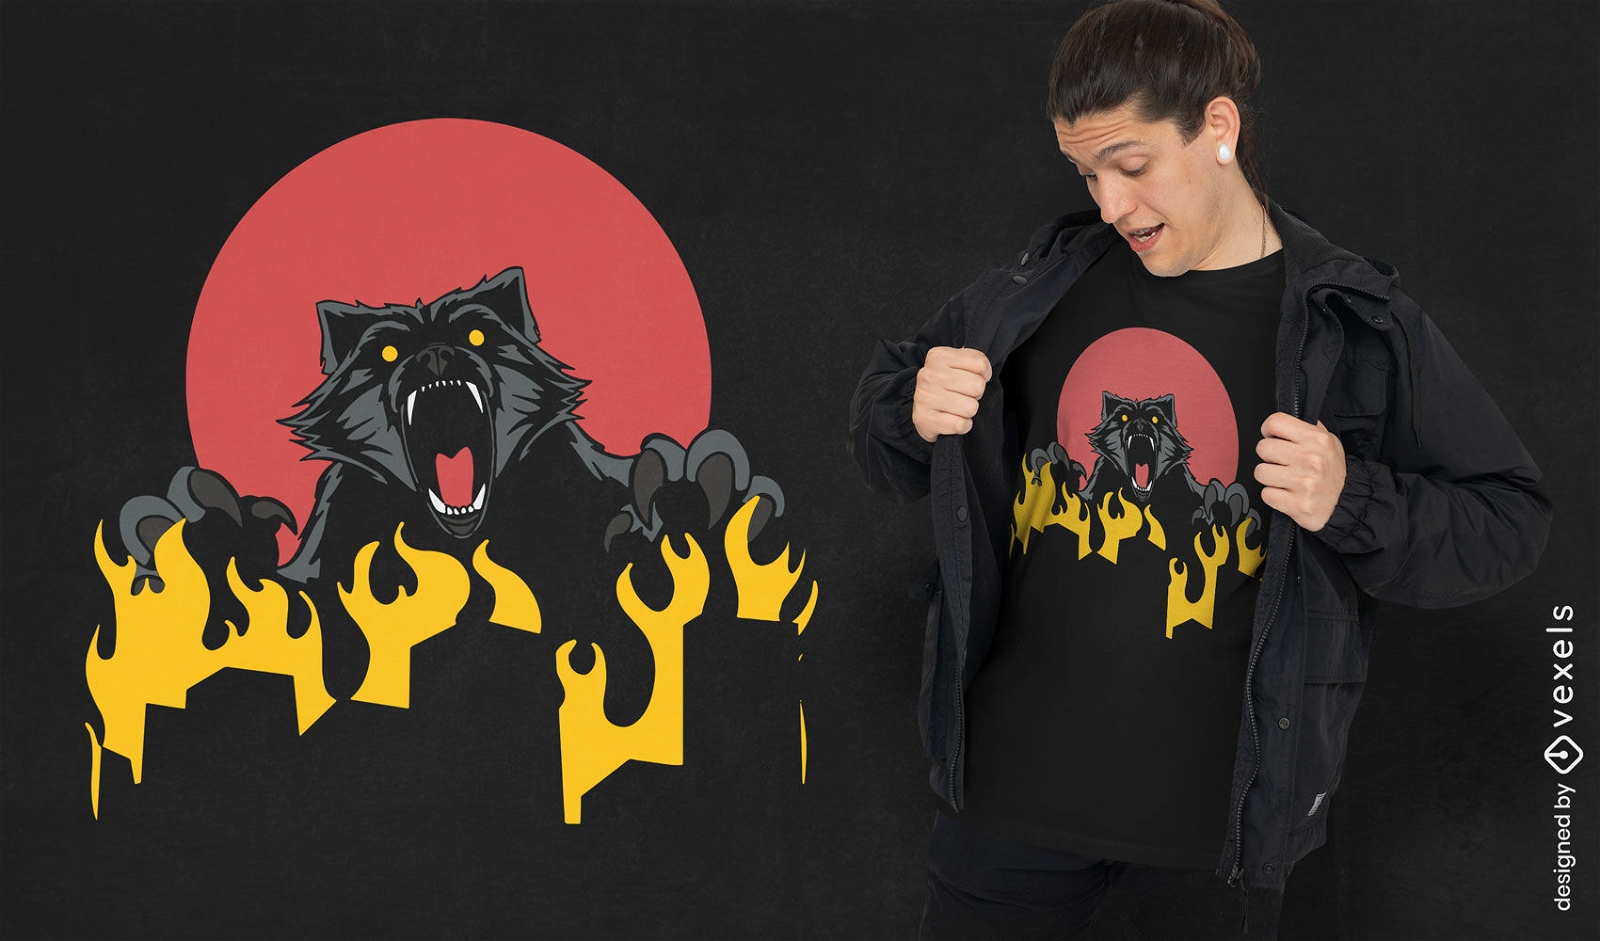 Raccoon attack t-shirt design